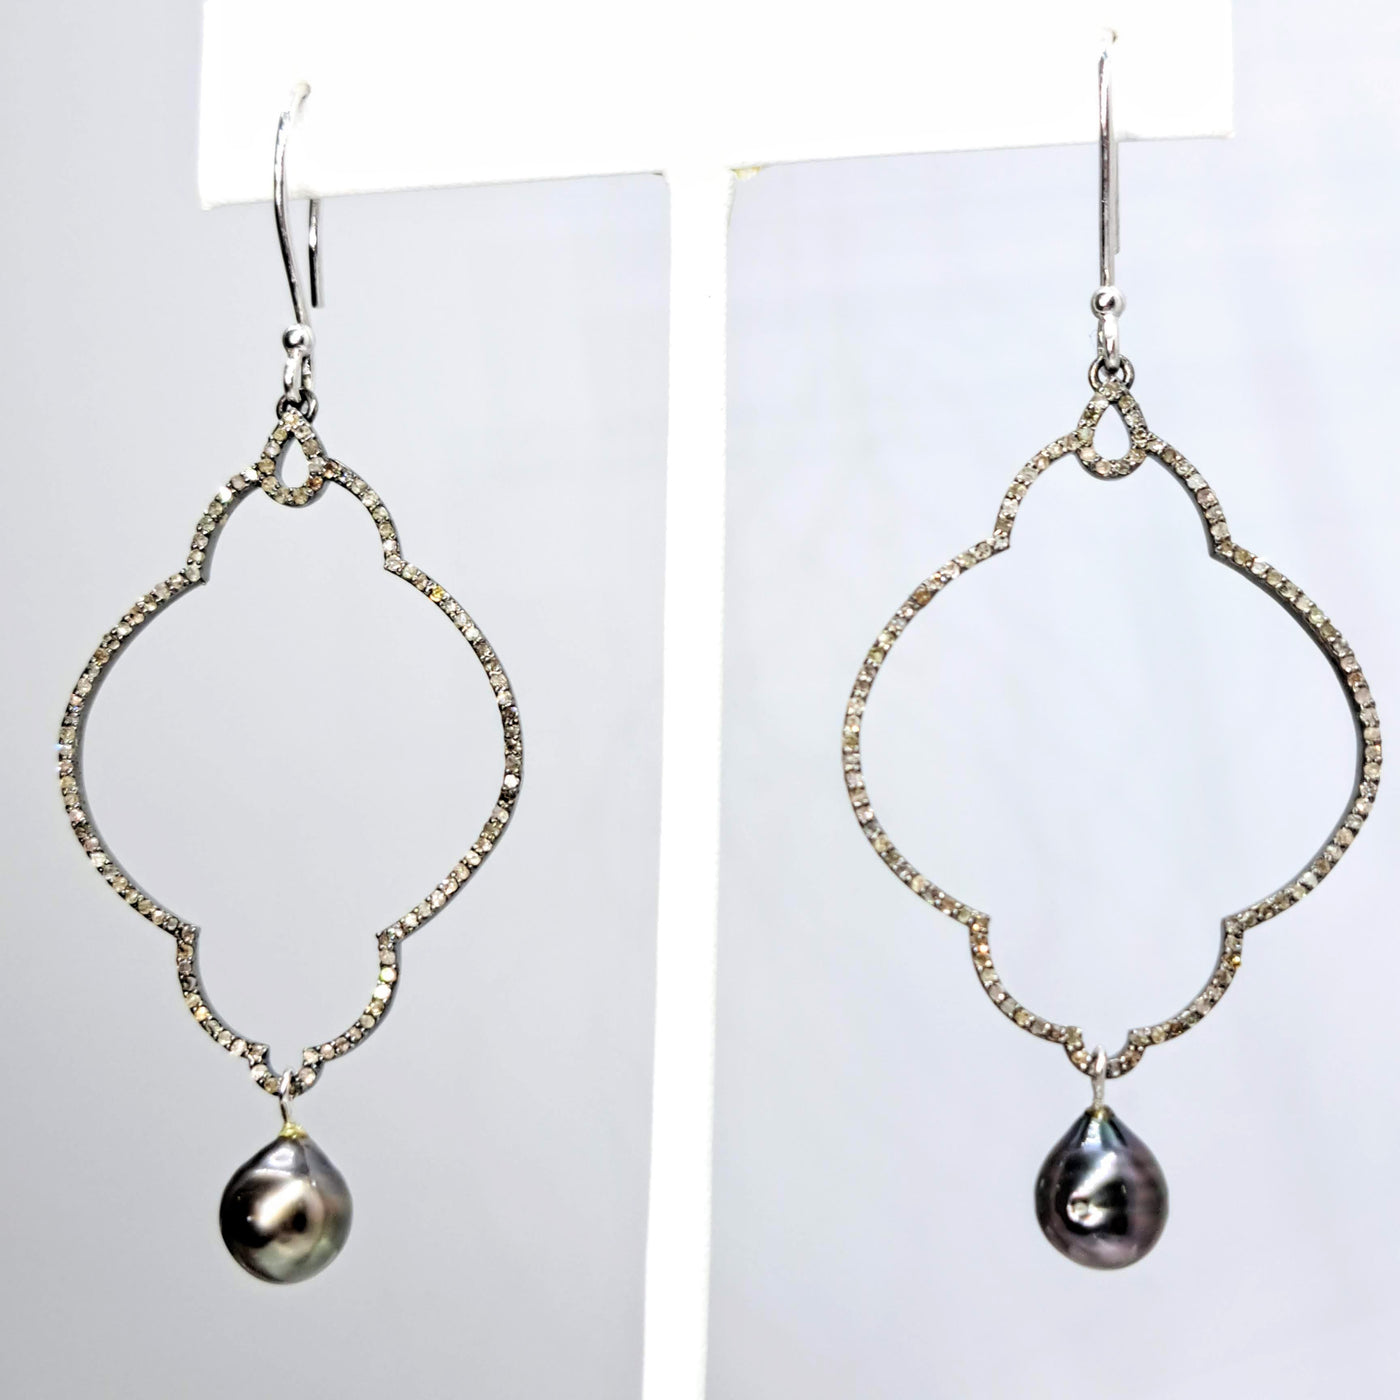 "Silver Lining" 2.75" Earrings - Diamonds, Tahitian Pearls, Sterling